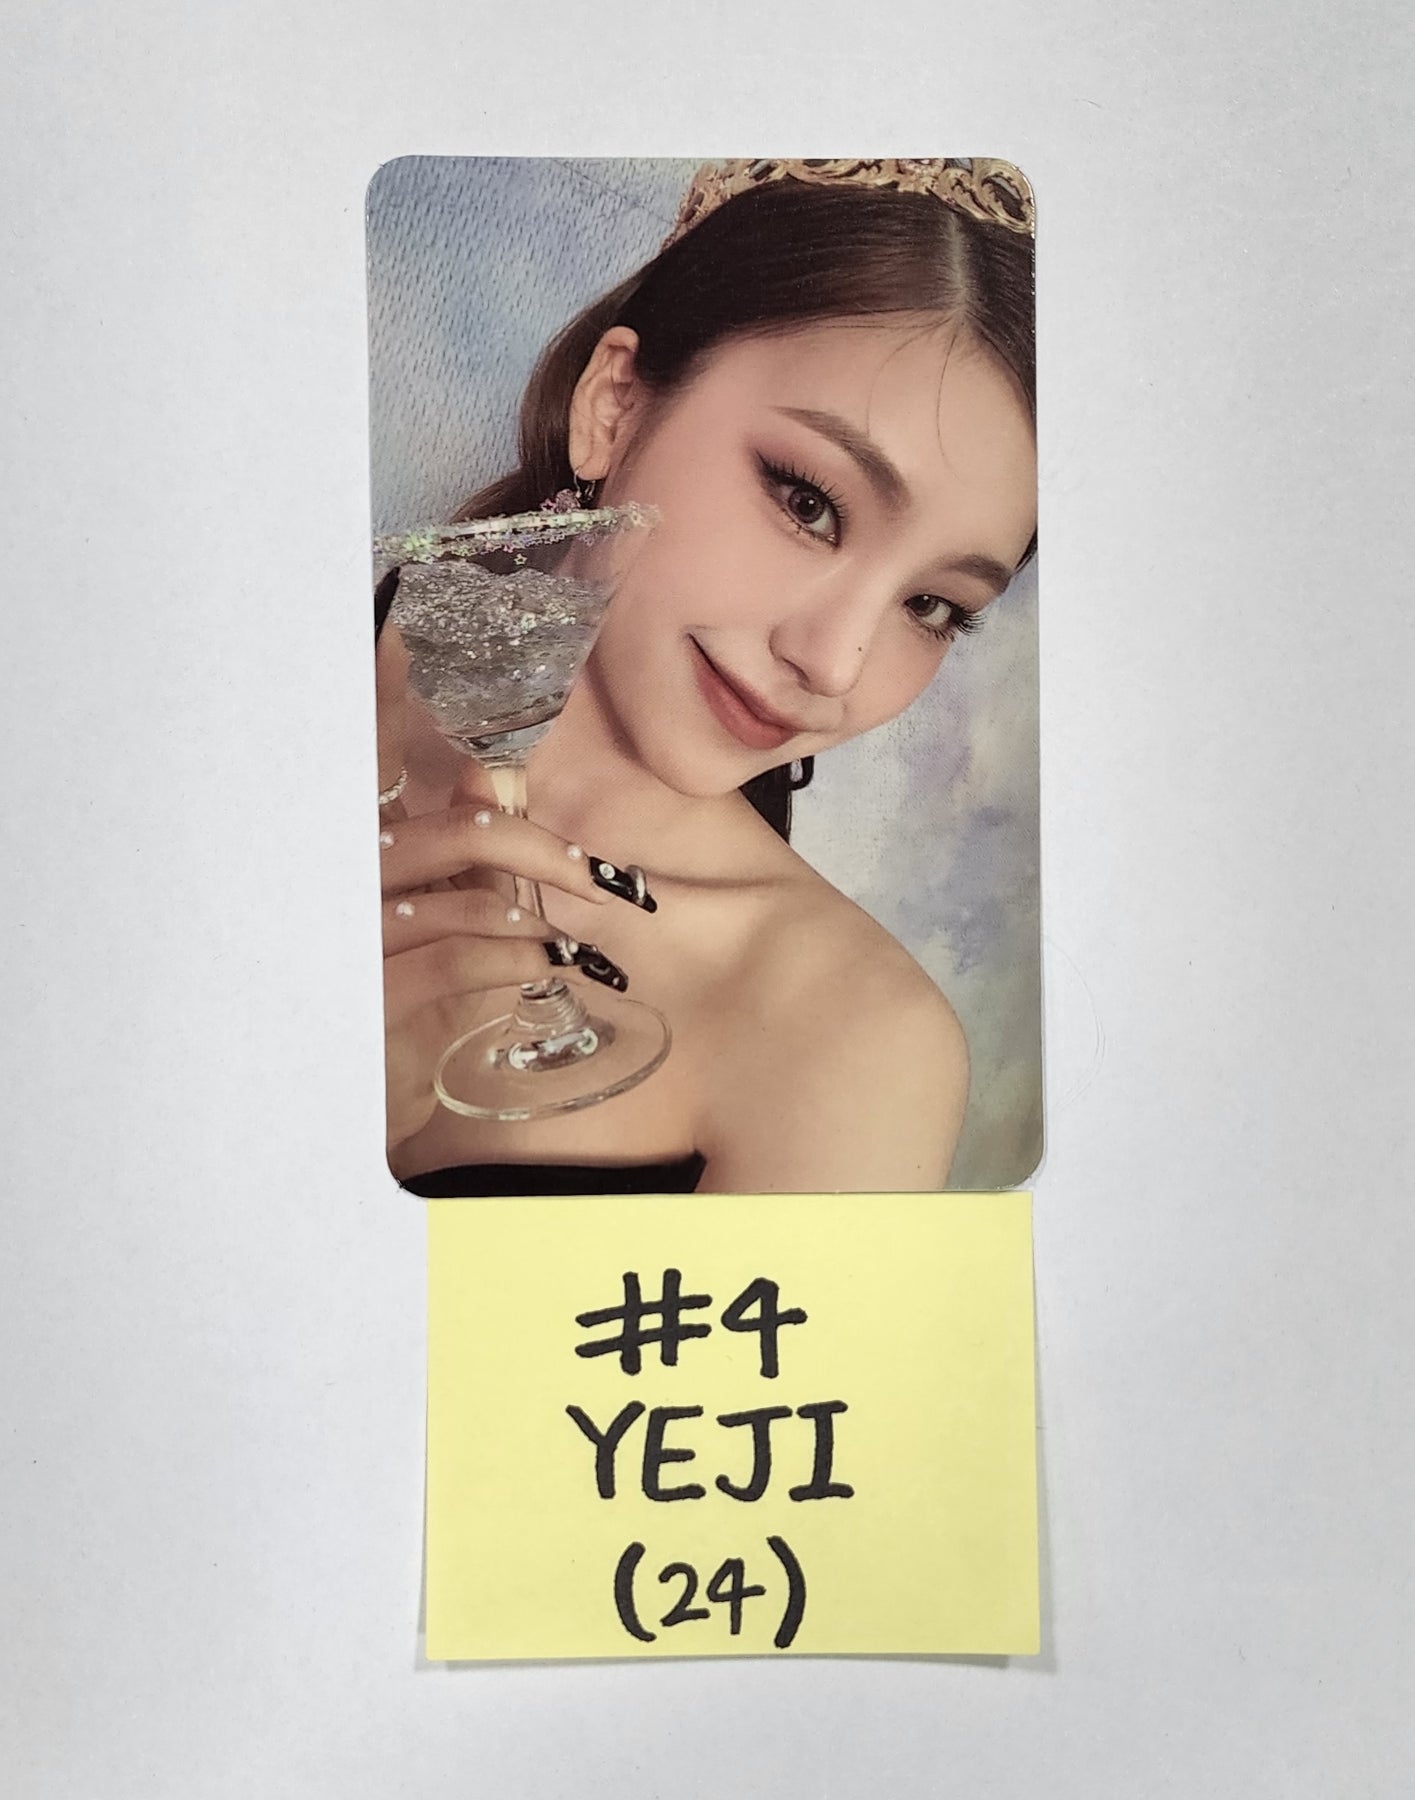 ITZY 'CHECKMATE' - Official Photocard [Yeji, Lia, RJ